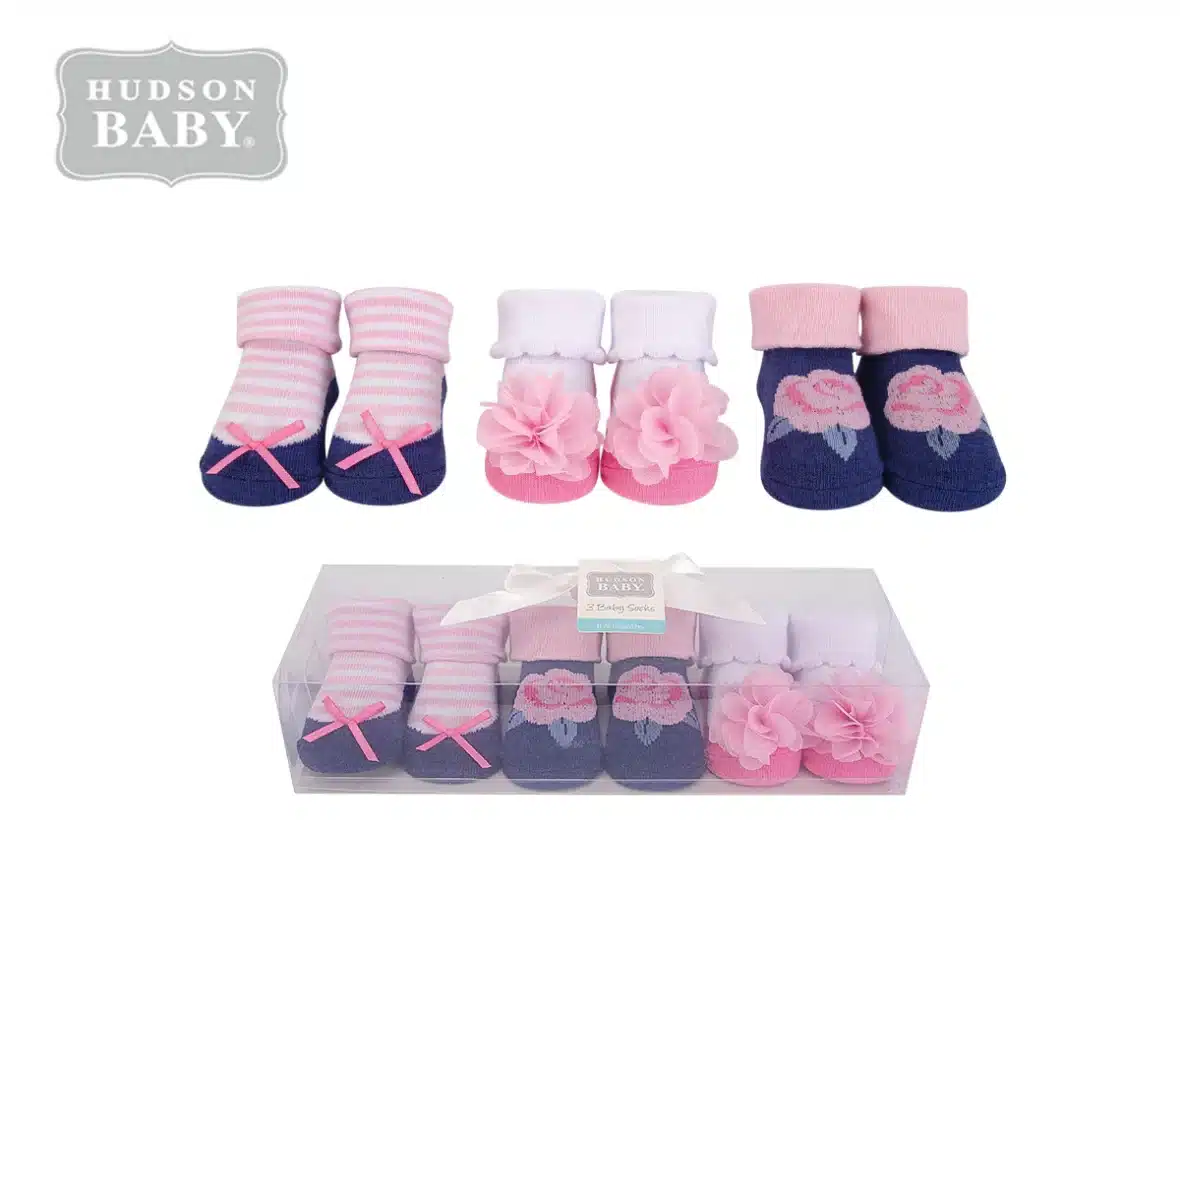 Hudson Baby Socks Gift Set – (3pairs)